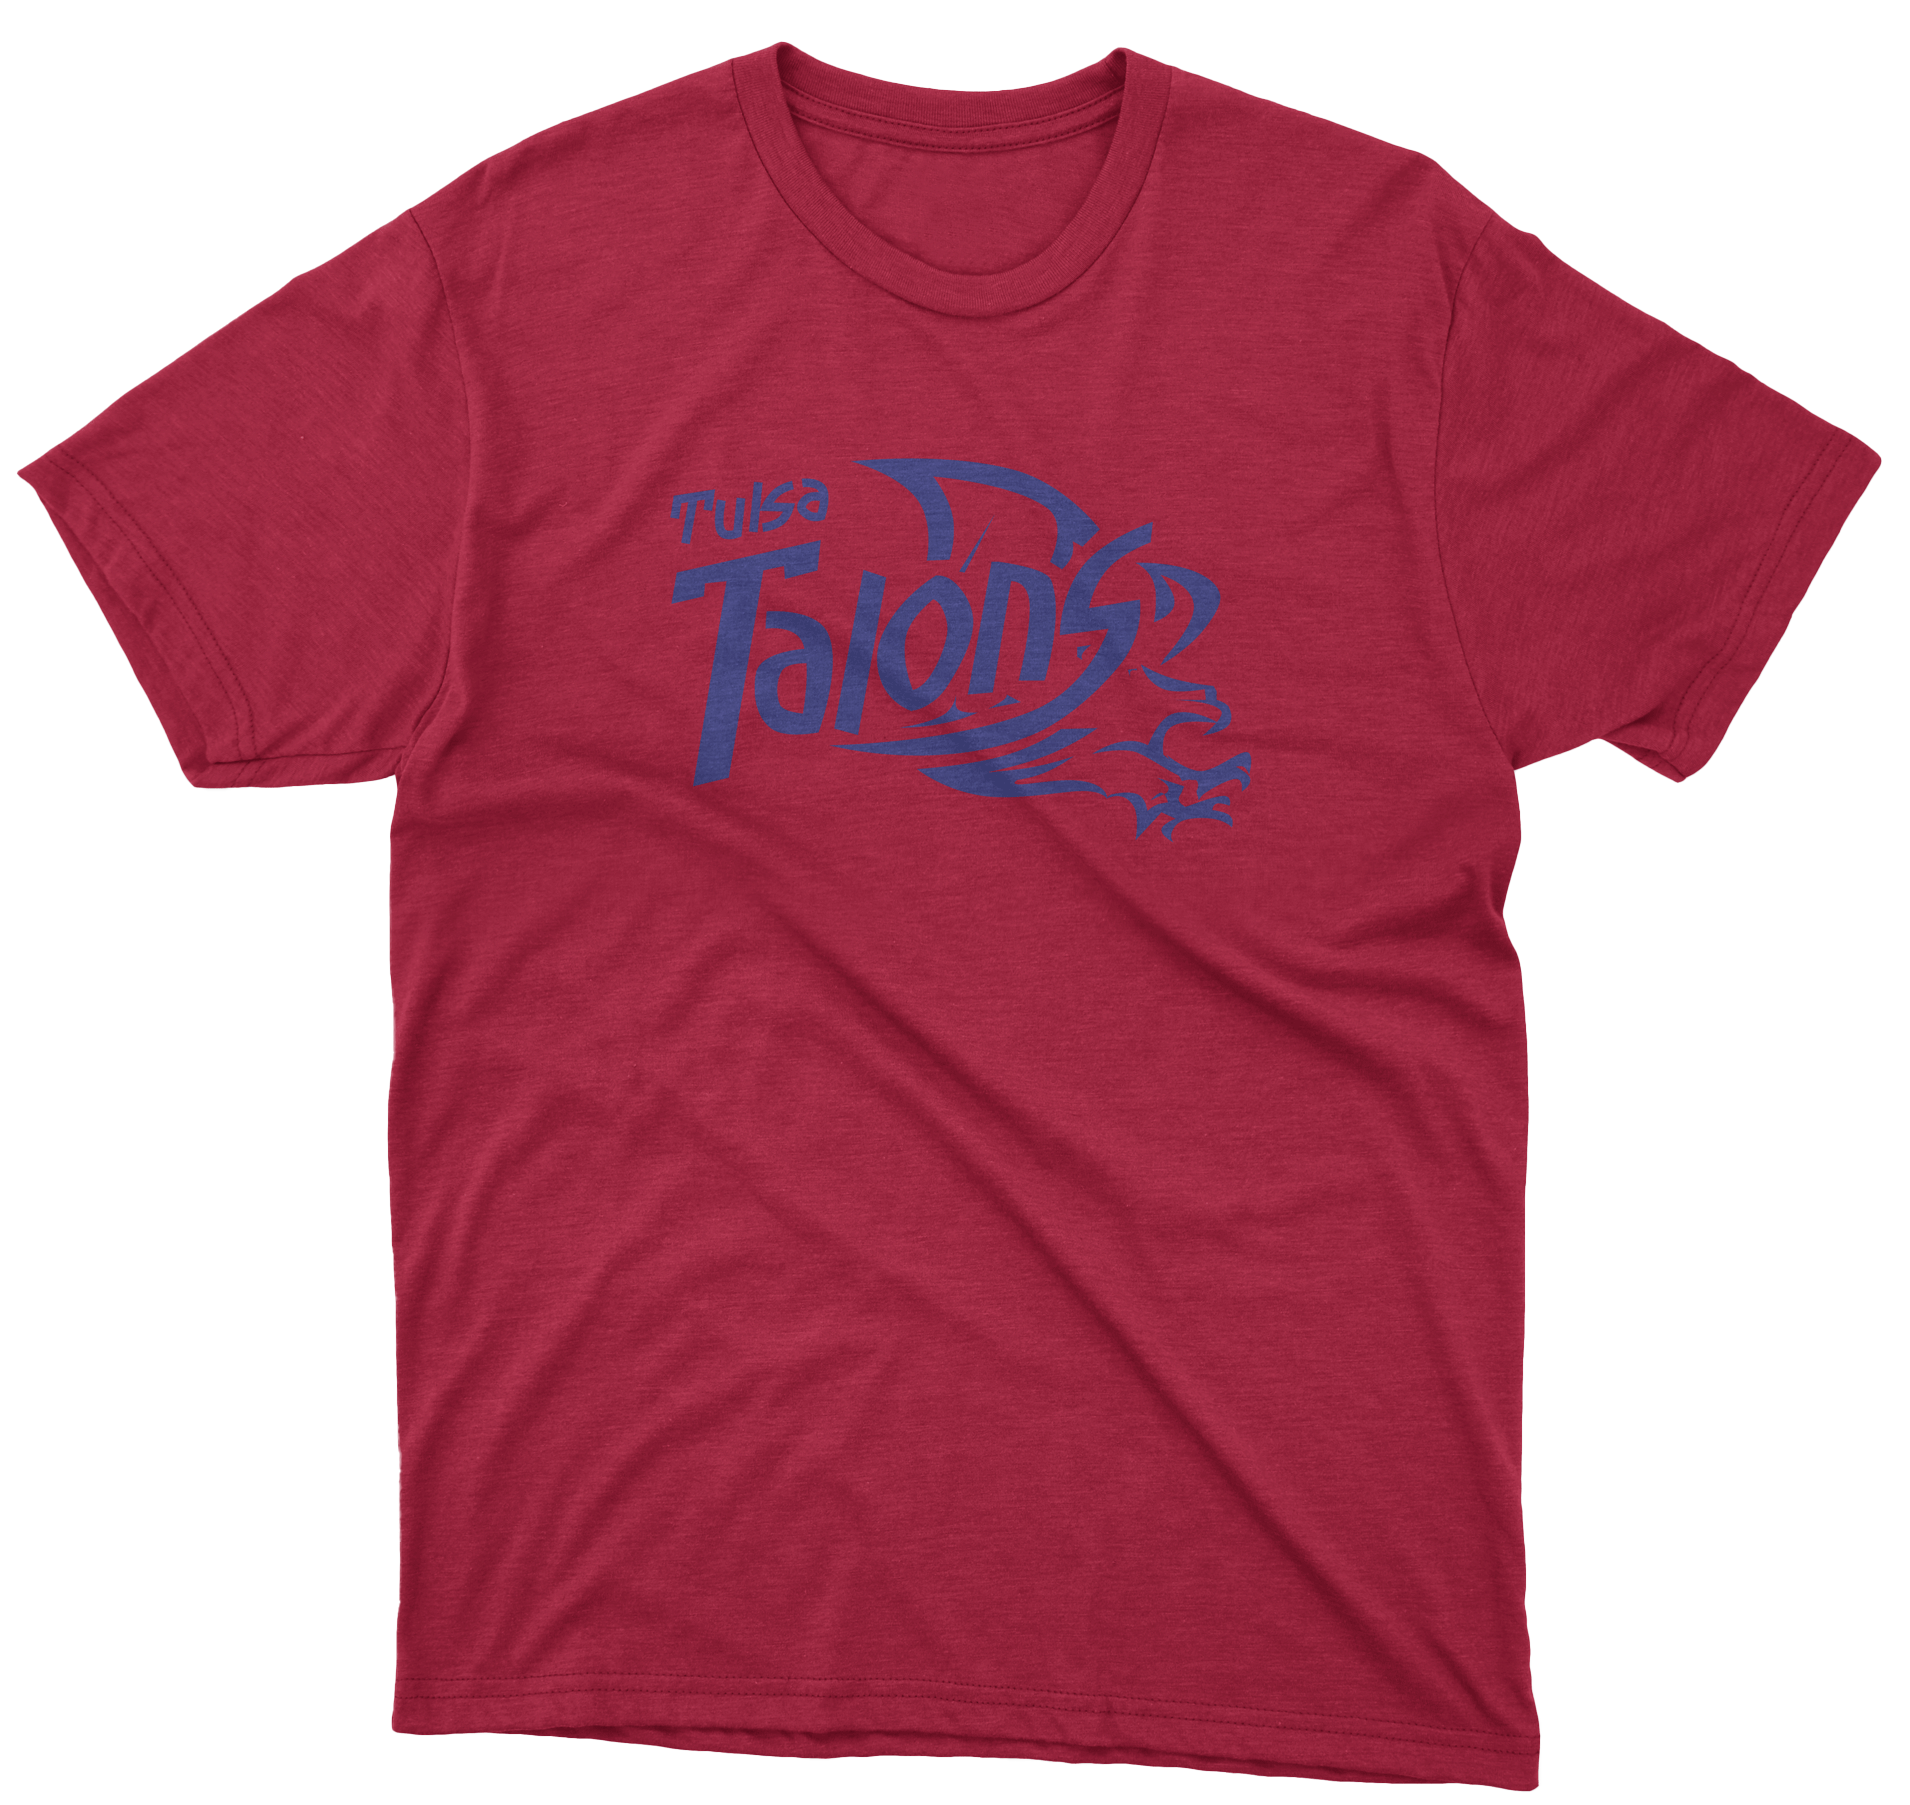 Tulsa Talons T-shirt red